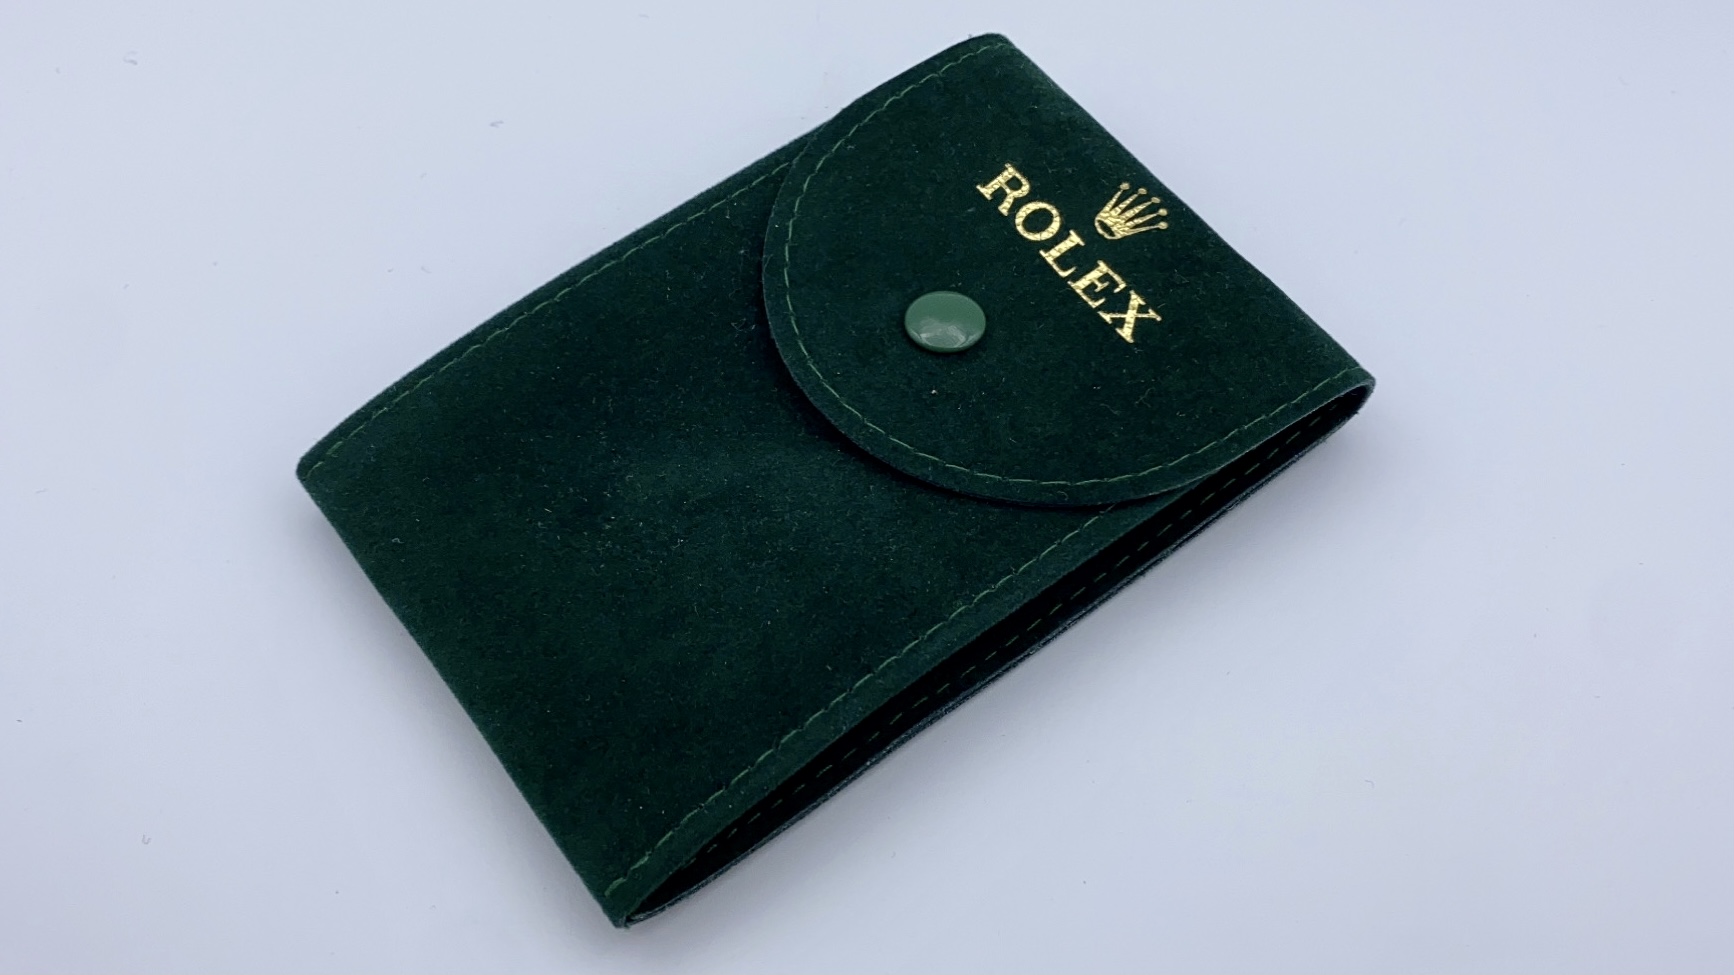 Rolex Oyster Perpetual Date - 1500